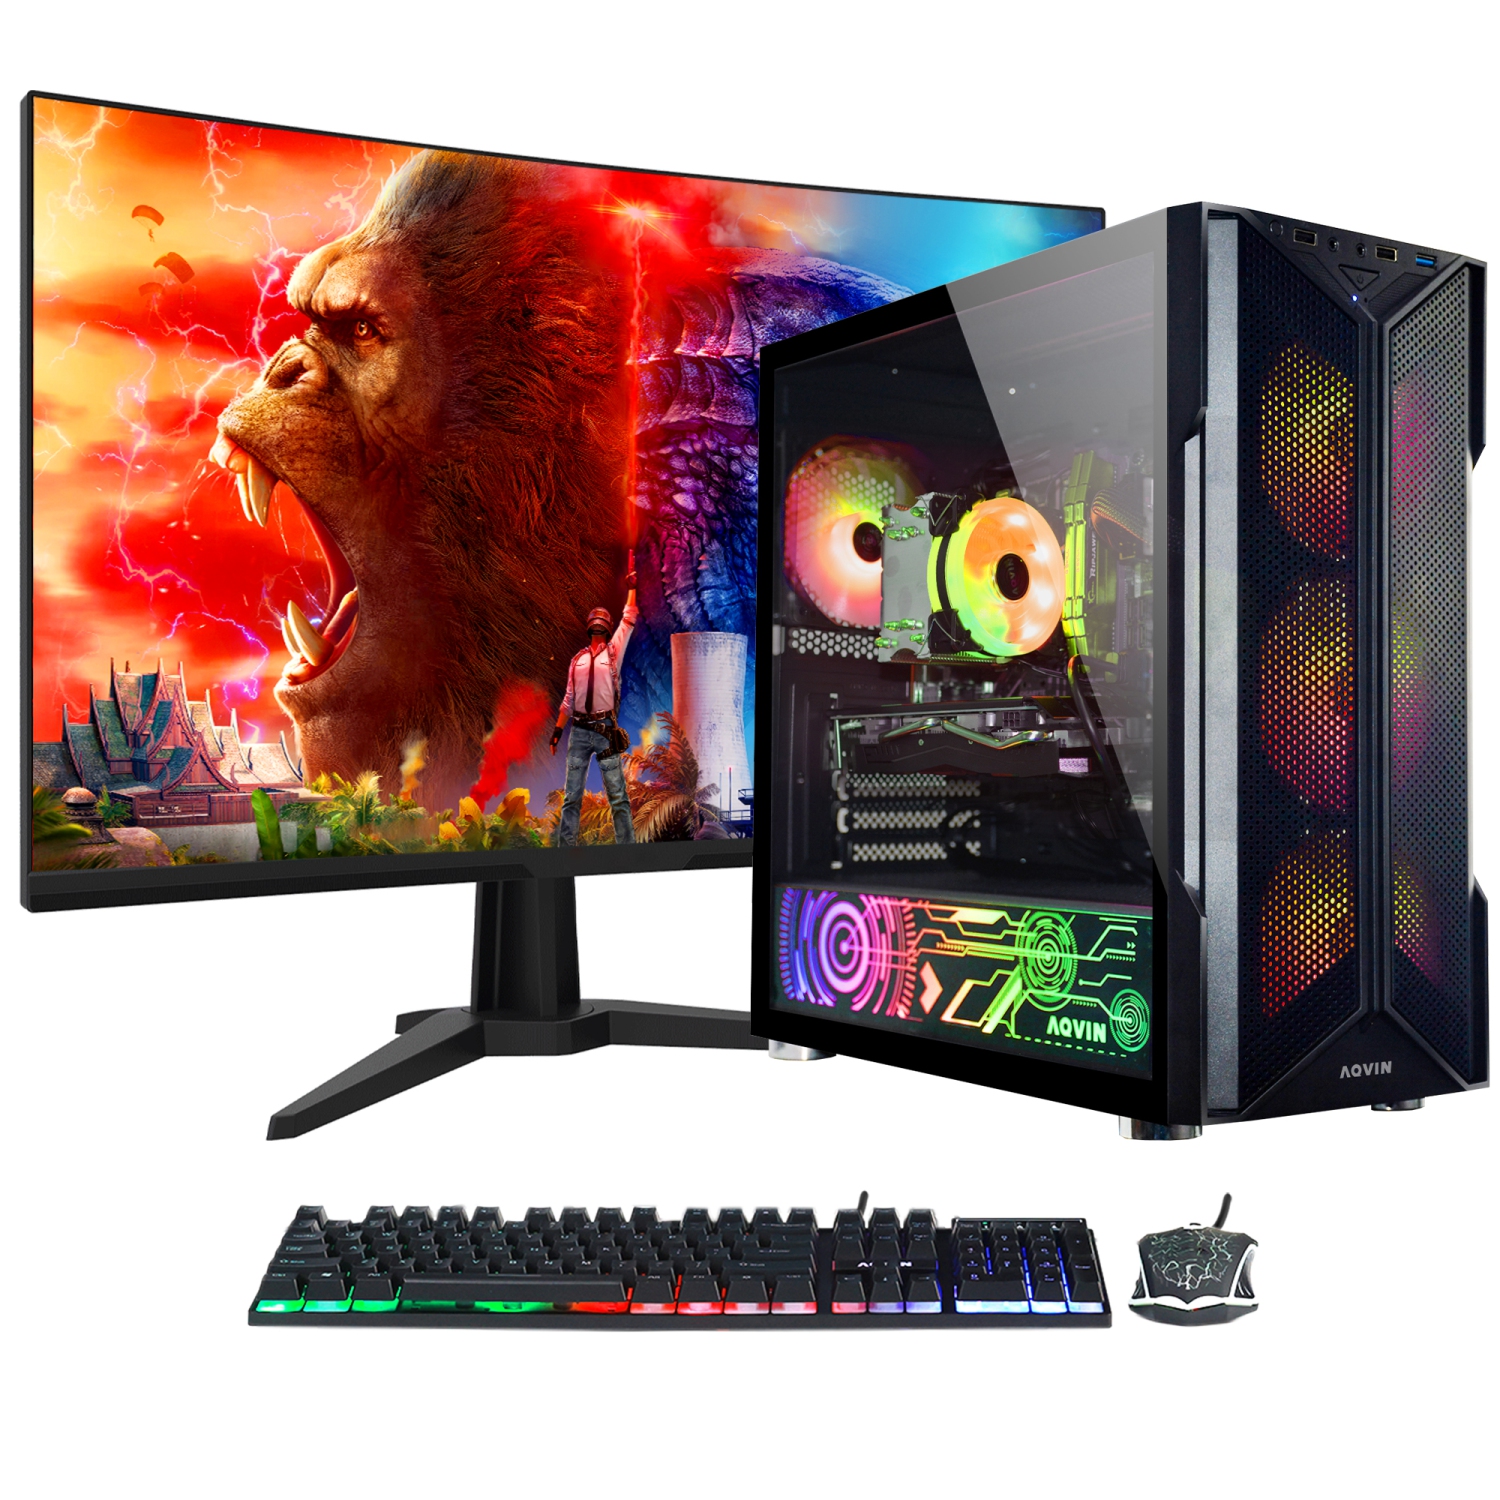 AQVIN-AQ20 Tower Desktop Computer Gaming PC / Intel Core i7 processor, 32GB DDR4 RAM, 1TB SSD, GeForce GTX 1660 Super 6GB, New 24 inch Curved Gaming Monitor, Windows 10 Pro